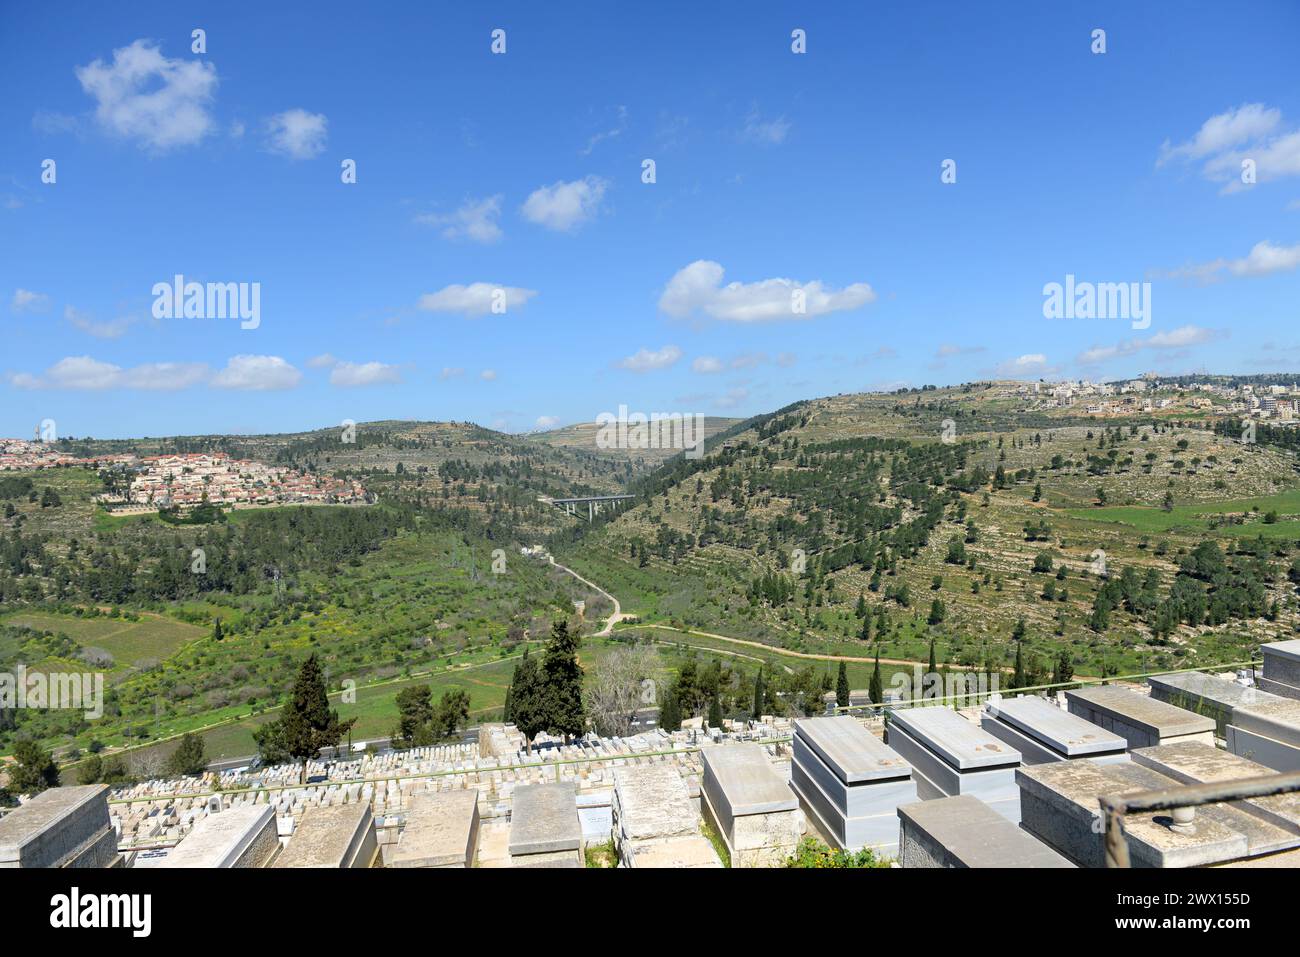 Beautiful landscapes seen from Har HaMenuchot Cemetery in Jerusalem, Israel. Stock Photo